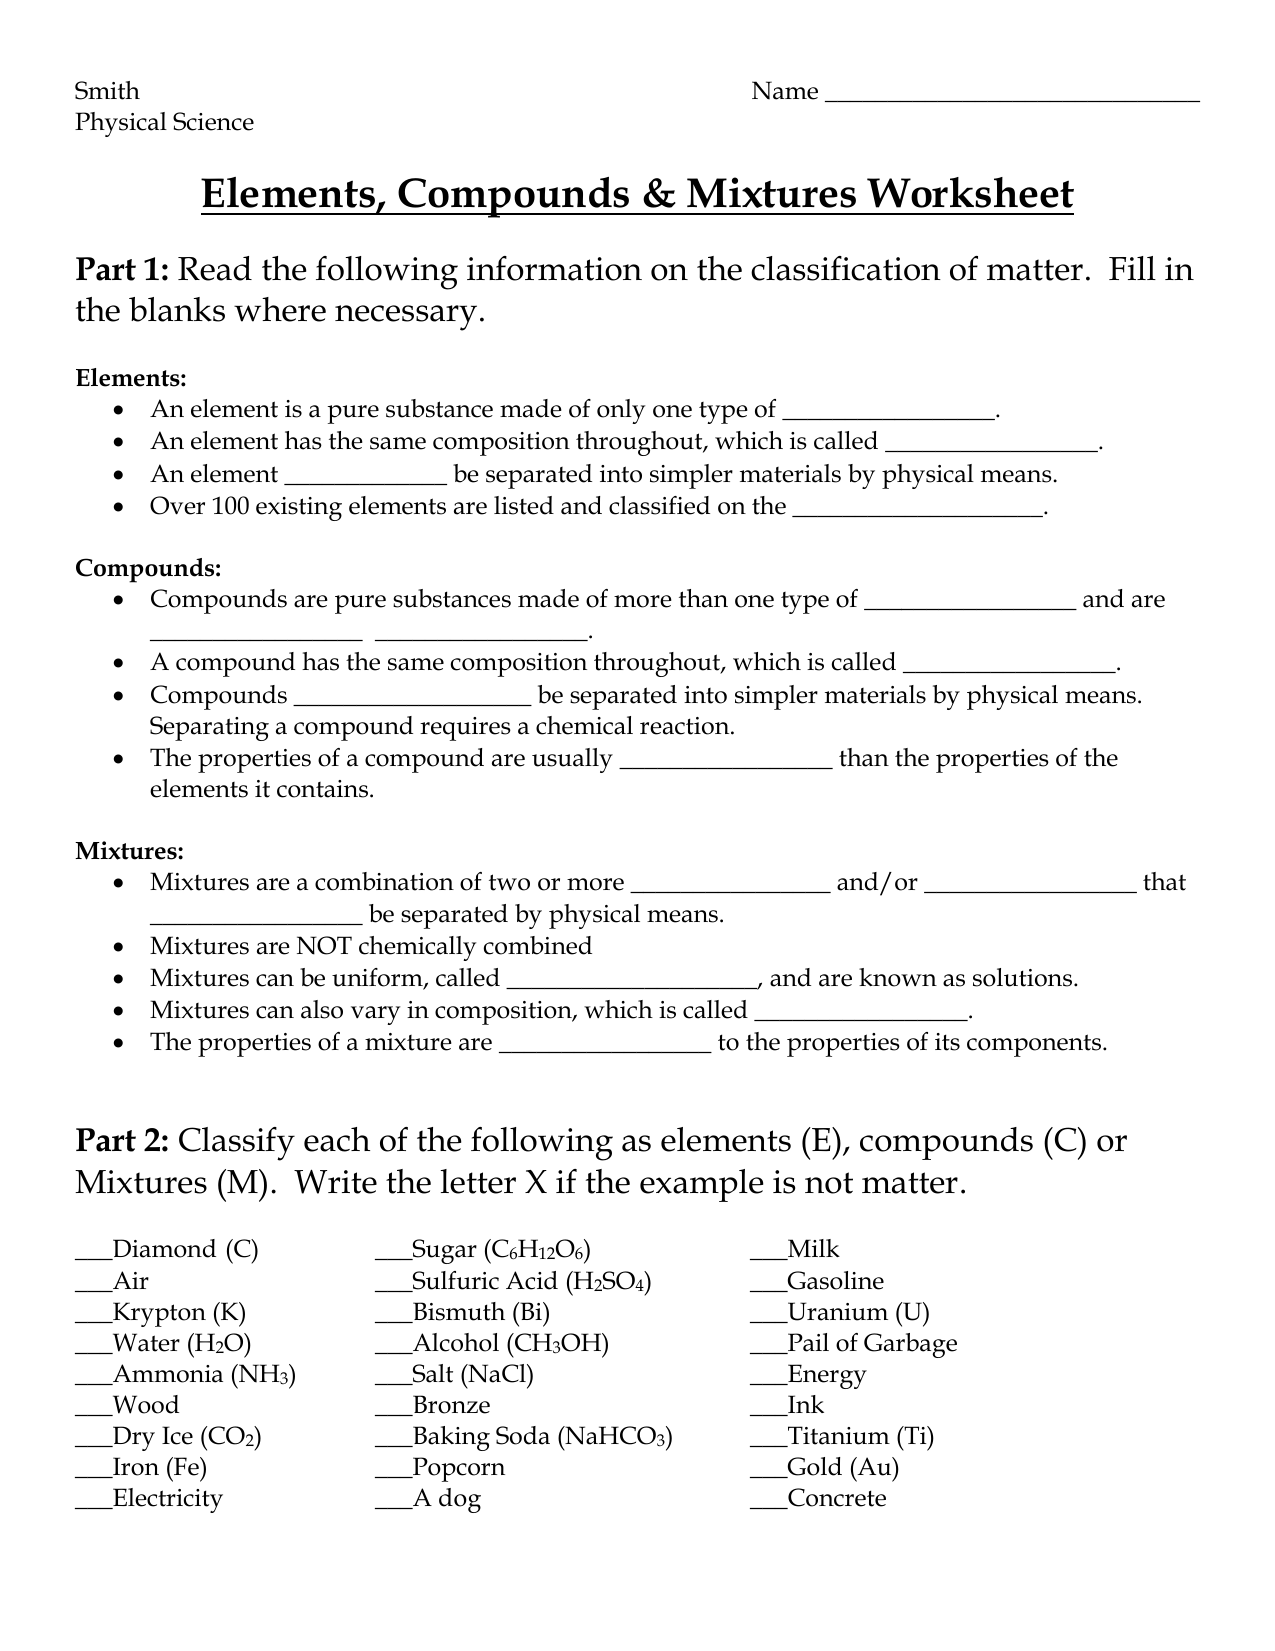 Elements, Compounds & Mixtures Worksheet Regarding Elements Compounds And Mixtures Worksheet